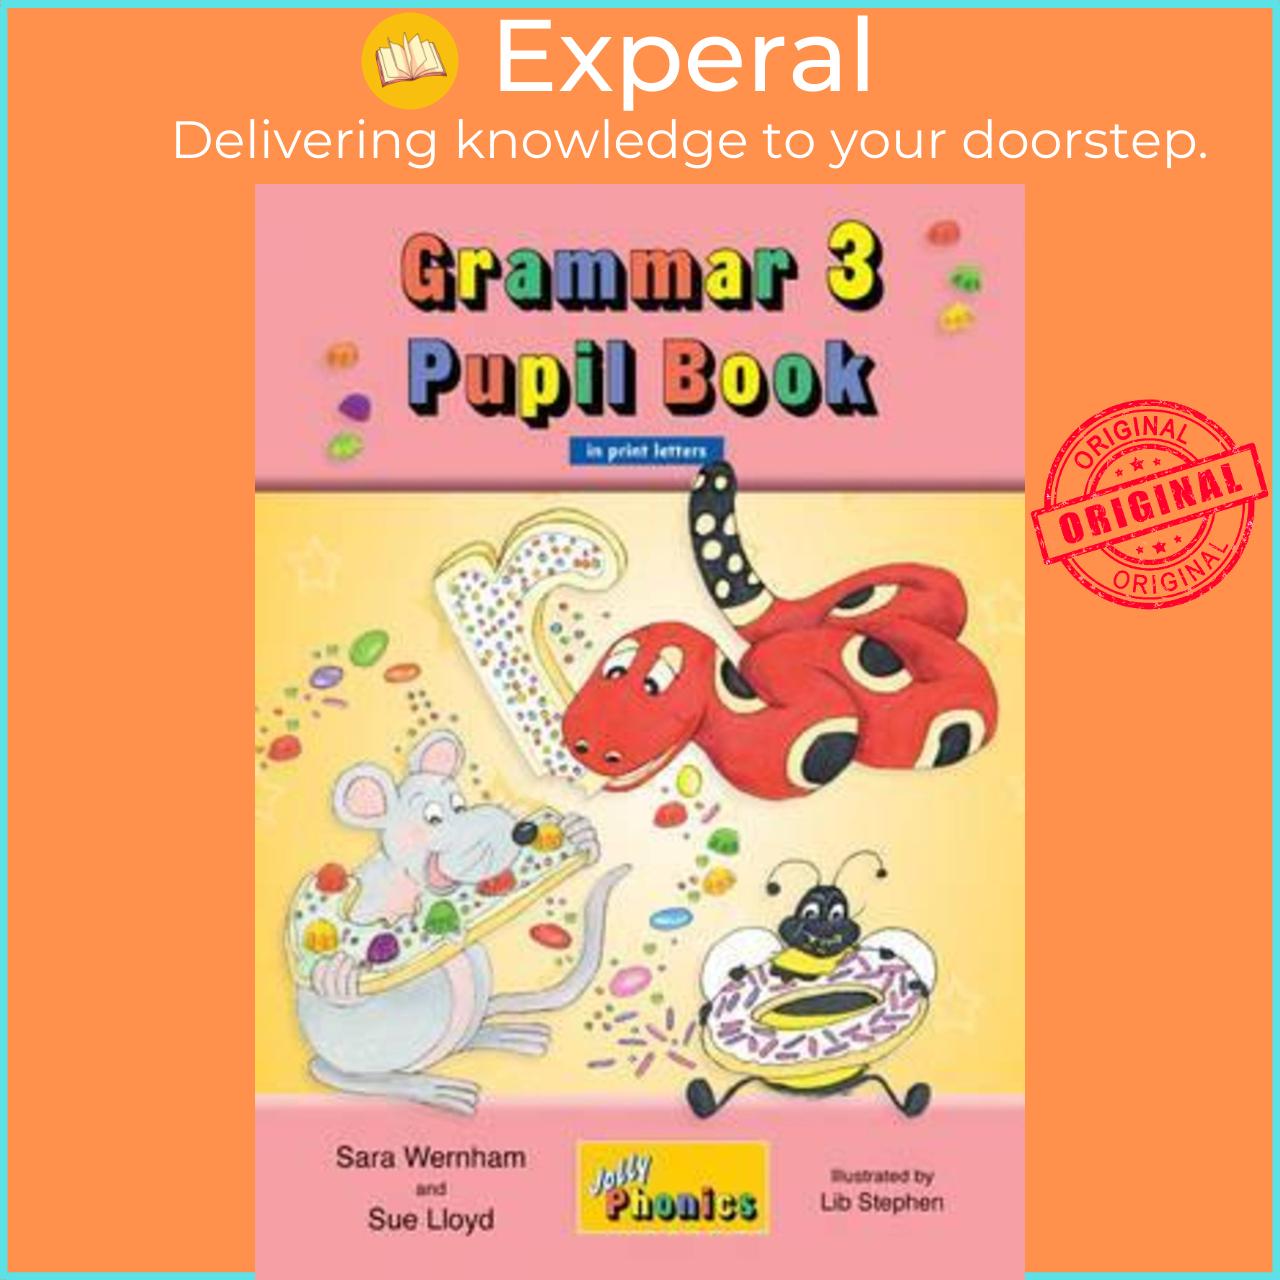 Sách - Grammar 3 Pupil Book : In Print Letters (British English edition) by Sara Wernham (UK edition, paperback)